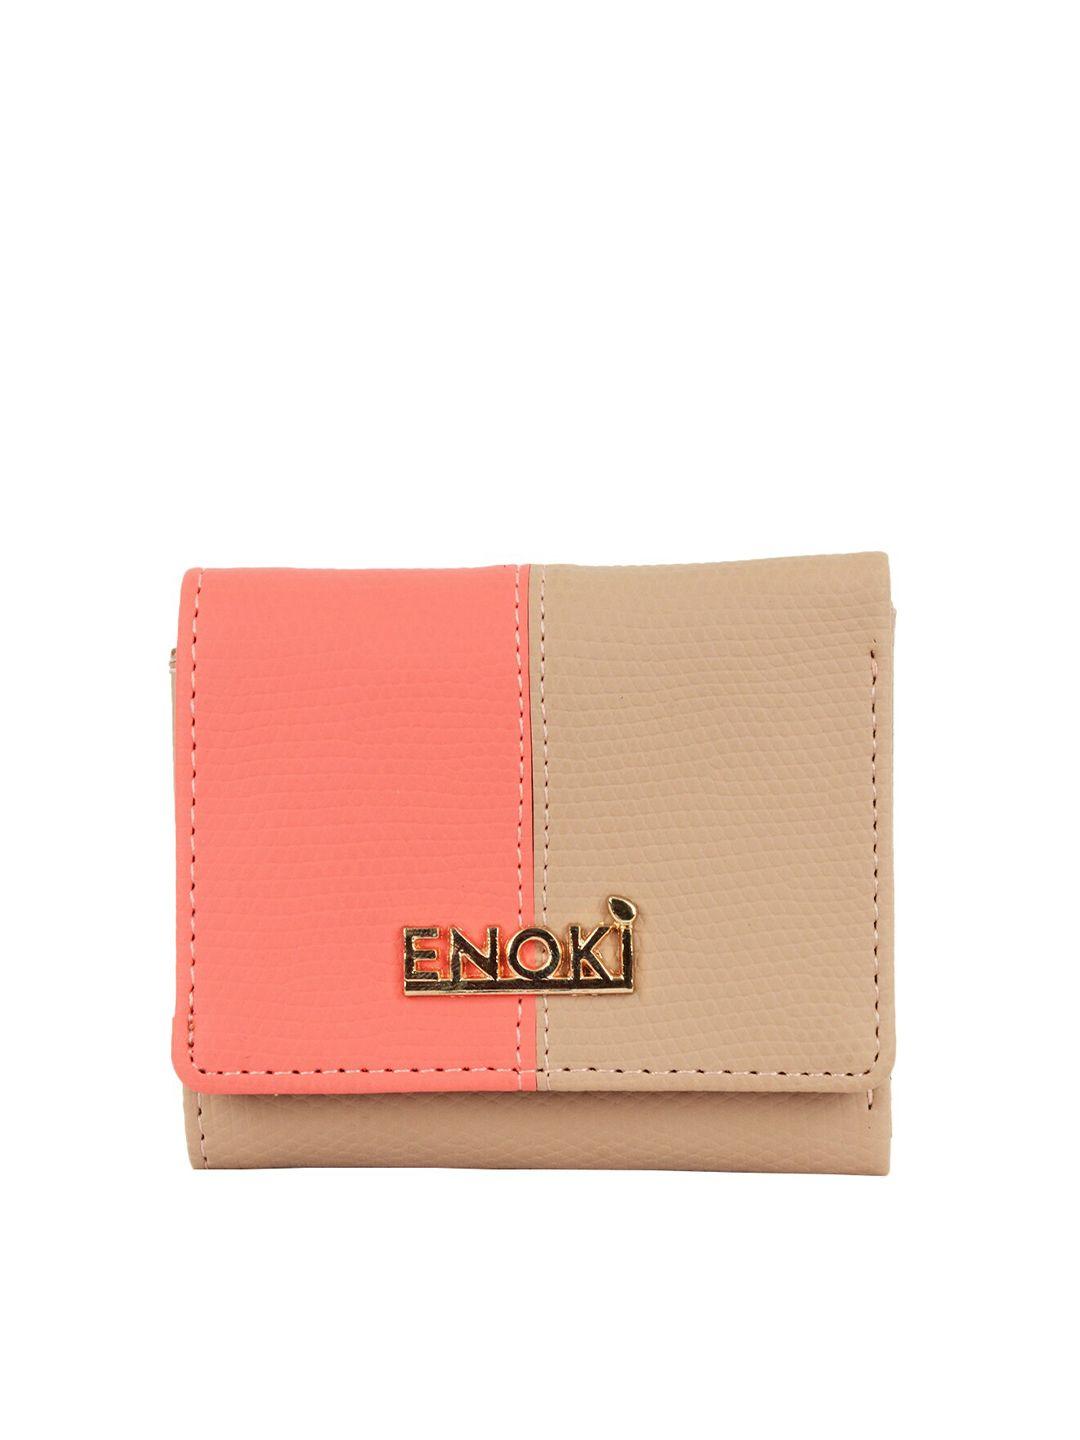 enoki women three fold wallet